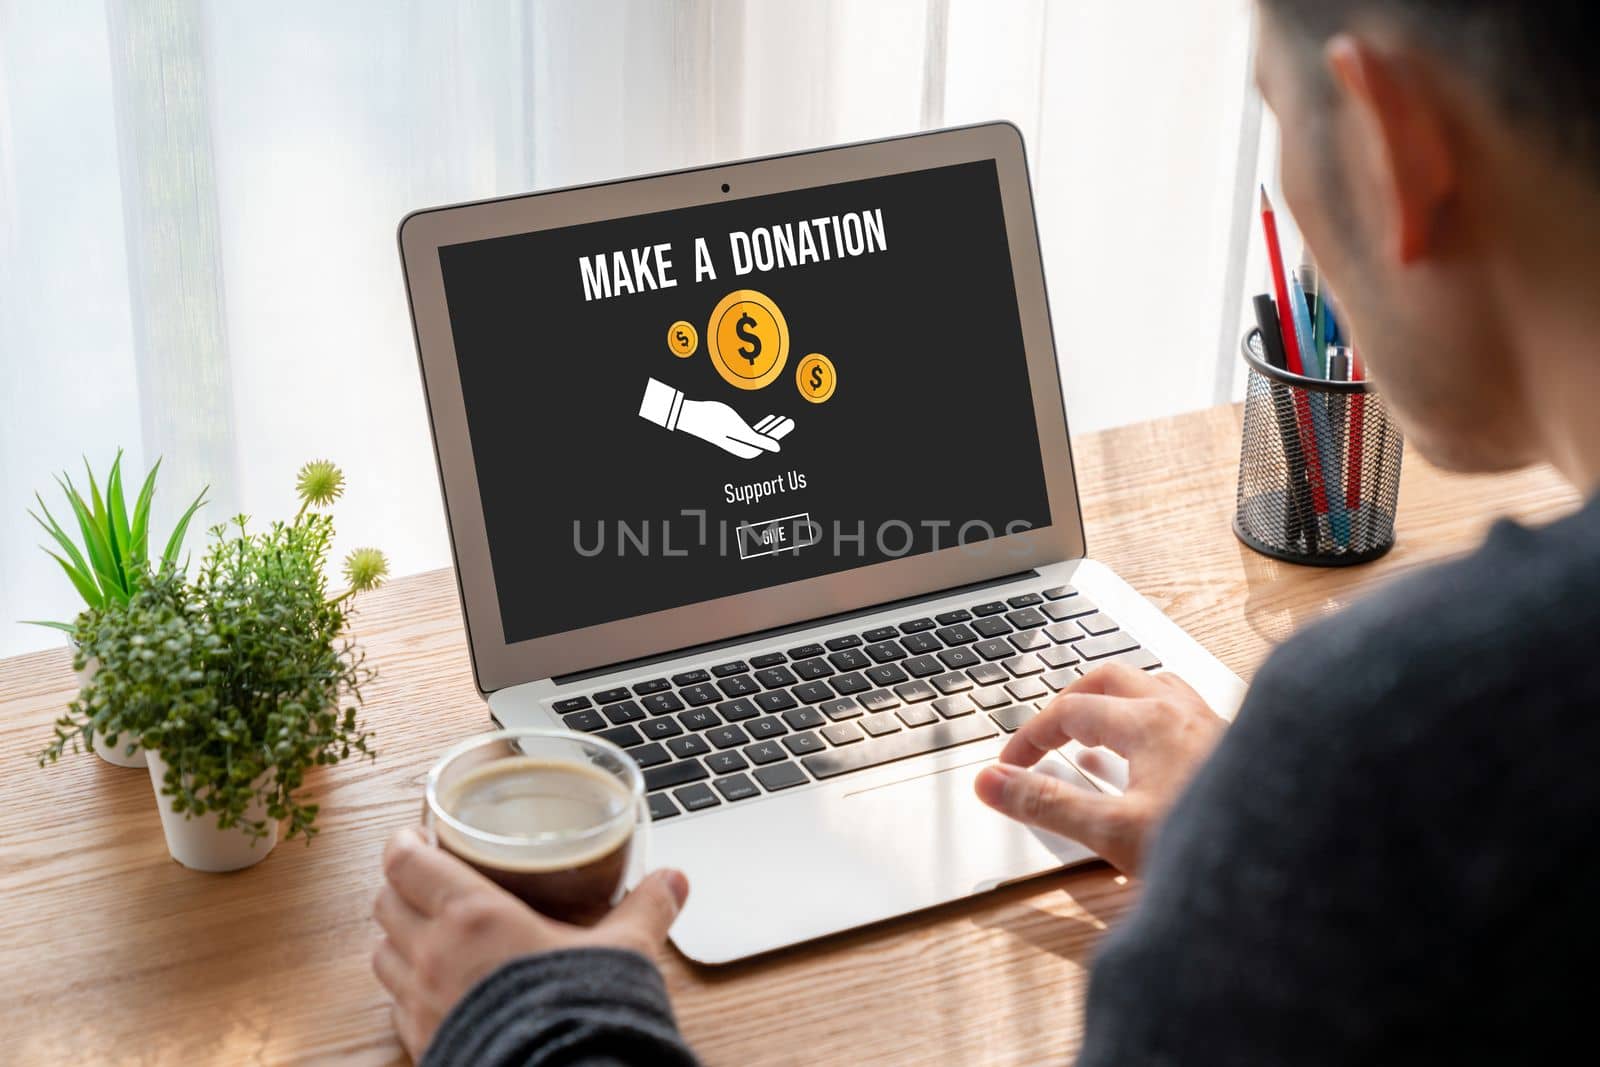 Online donation platform offer modish money sending system for people to transfer on the internet